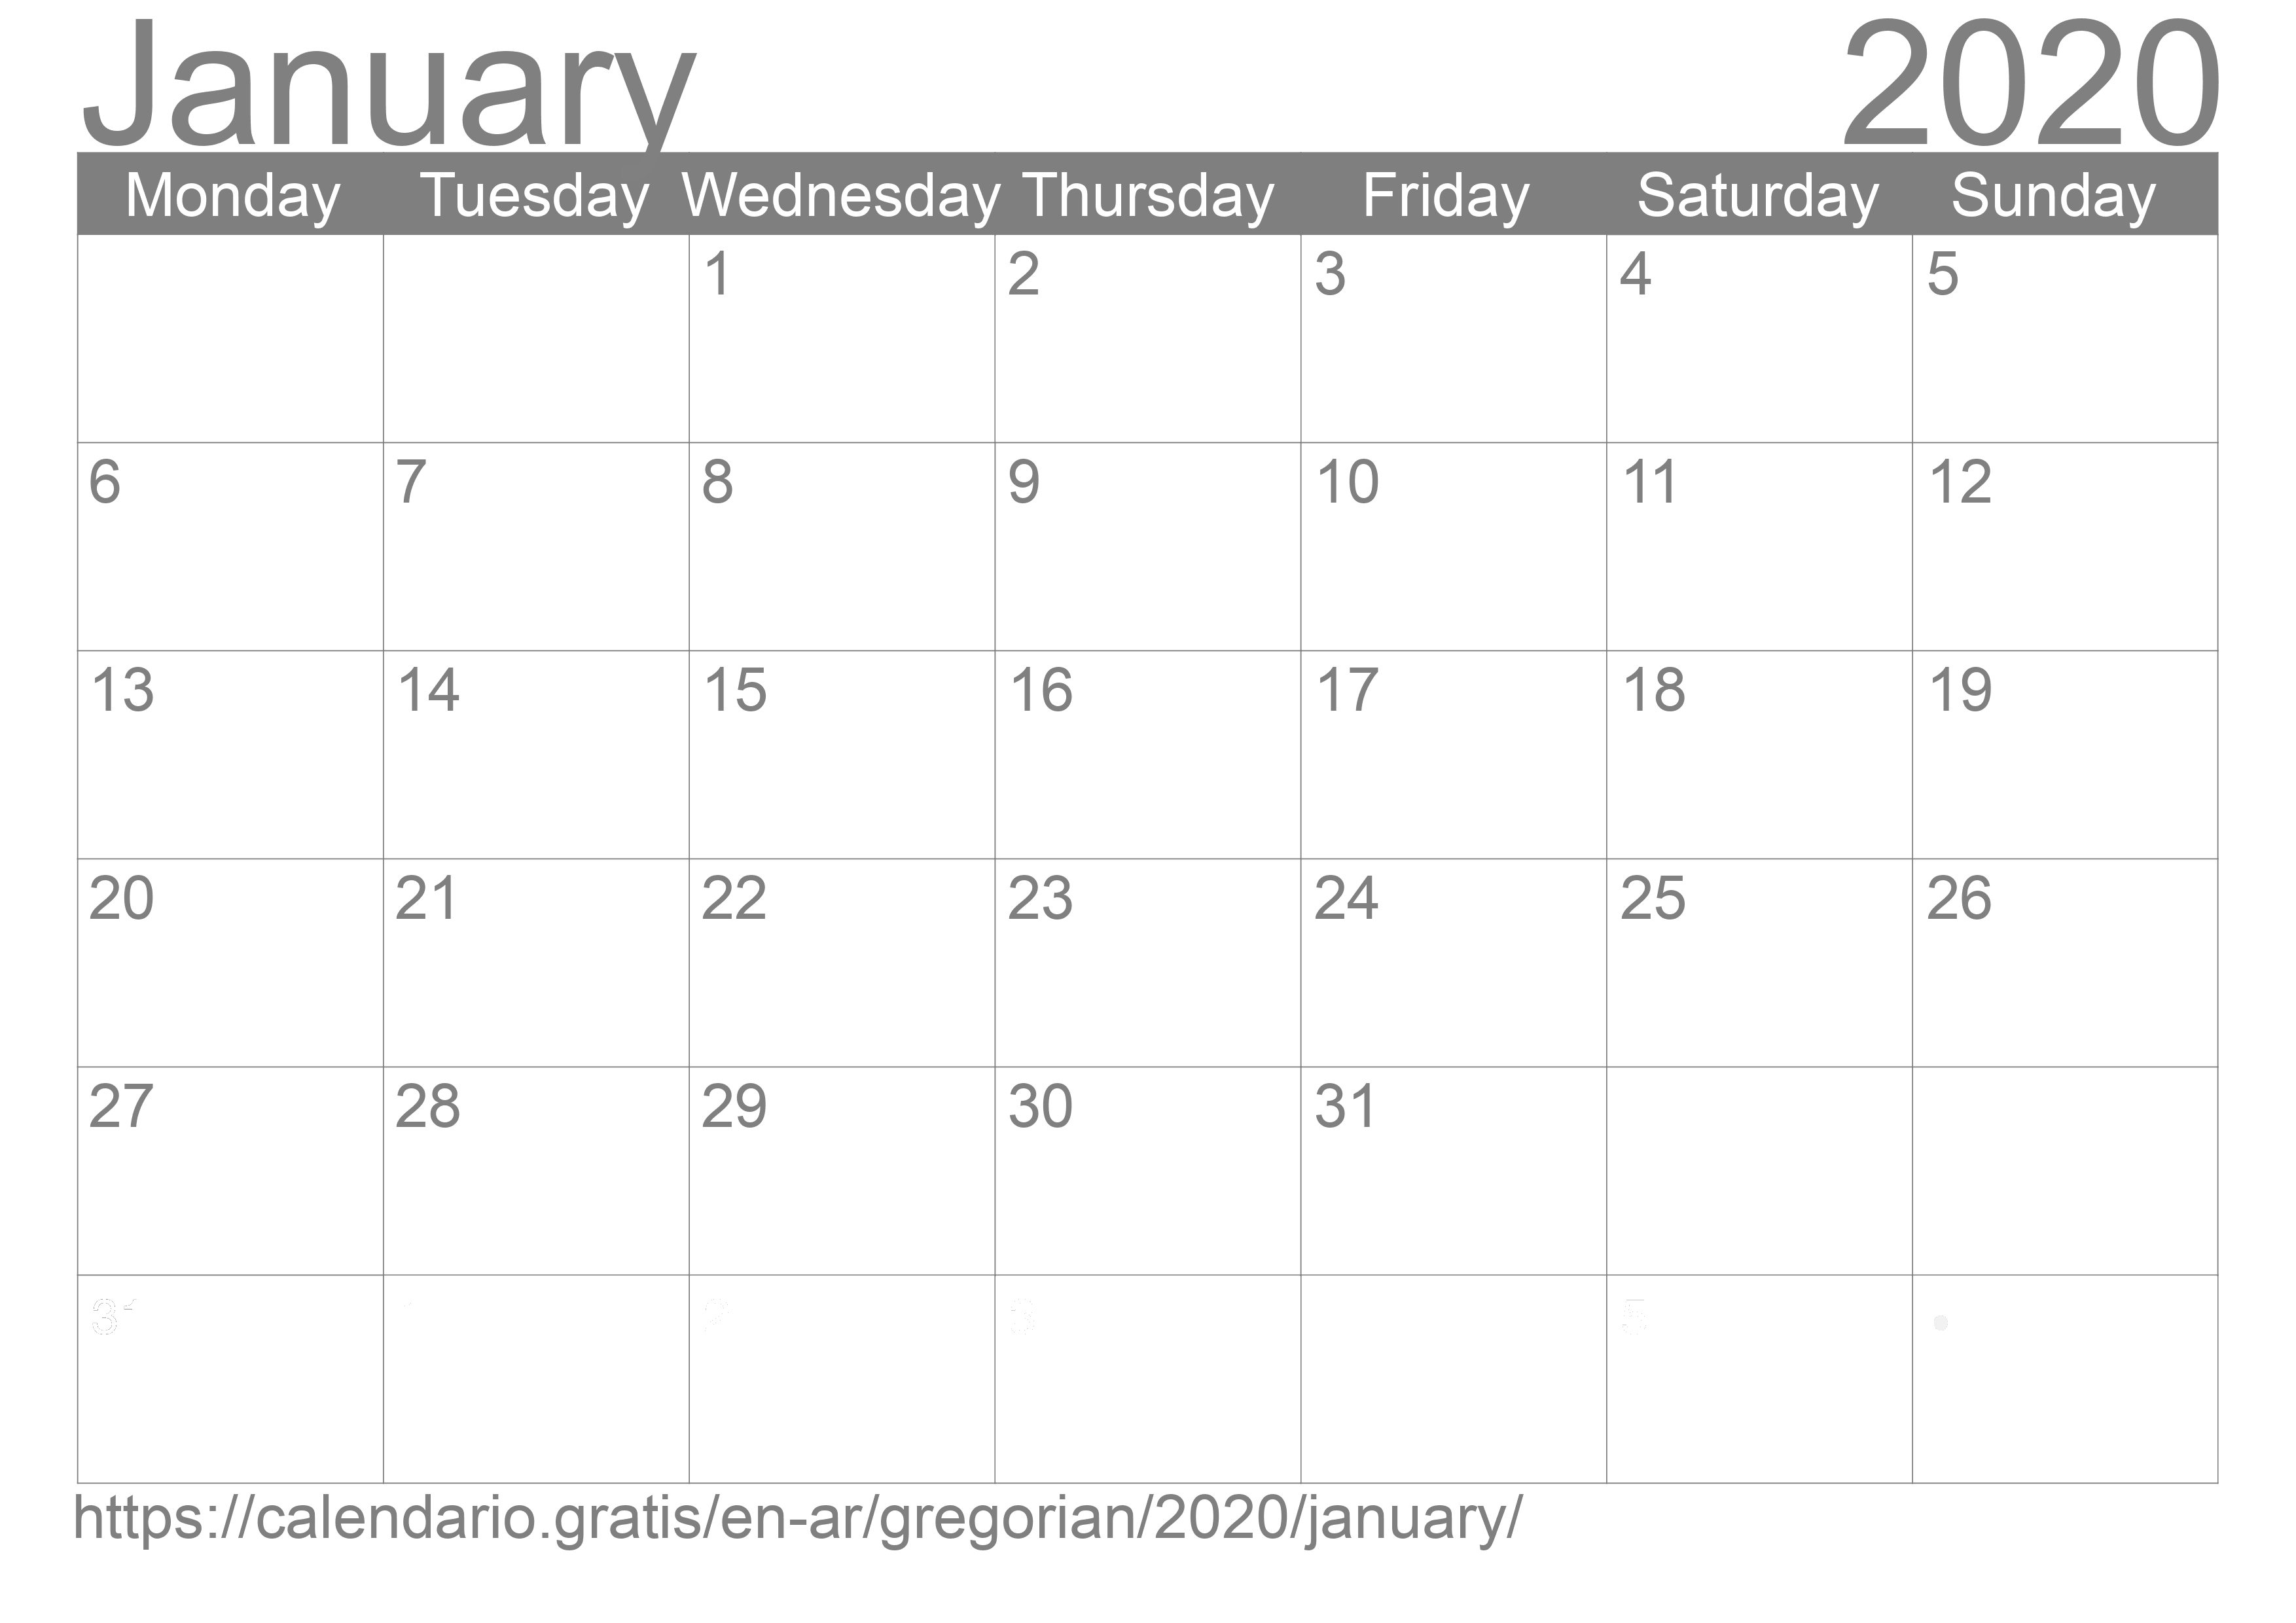 Calendar January 2020 to print